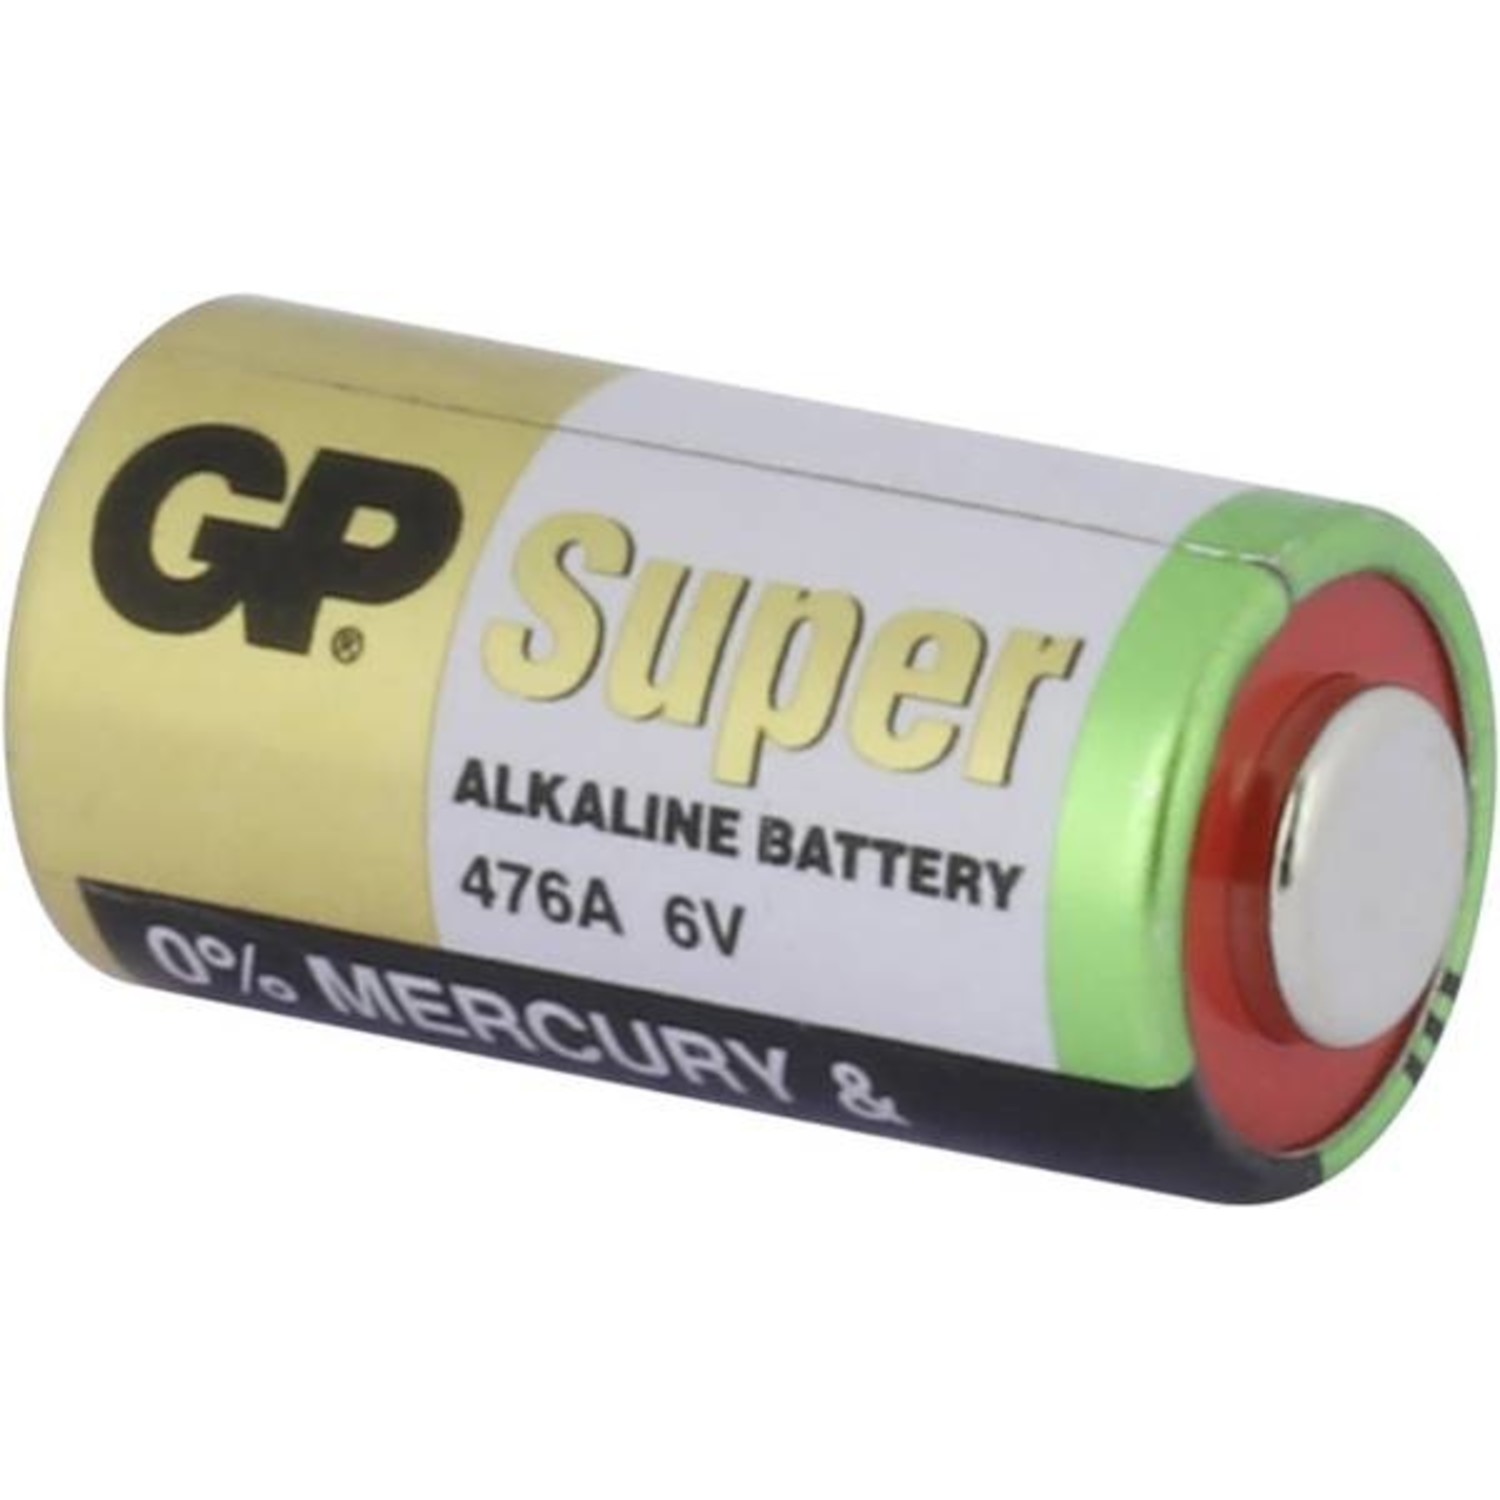 Gp alkaline battery. Батарейка щелочная GP super 4lr61 2cr, 550 МАЧ 6v. Alkaline Battery Sony 6v. 4lr44 (476a). Батарейка GP [а23, щелочная, 1 шт.].